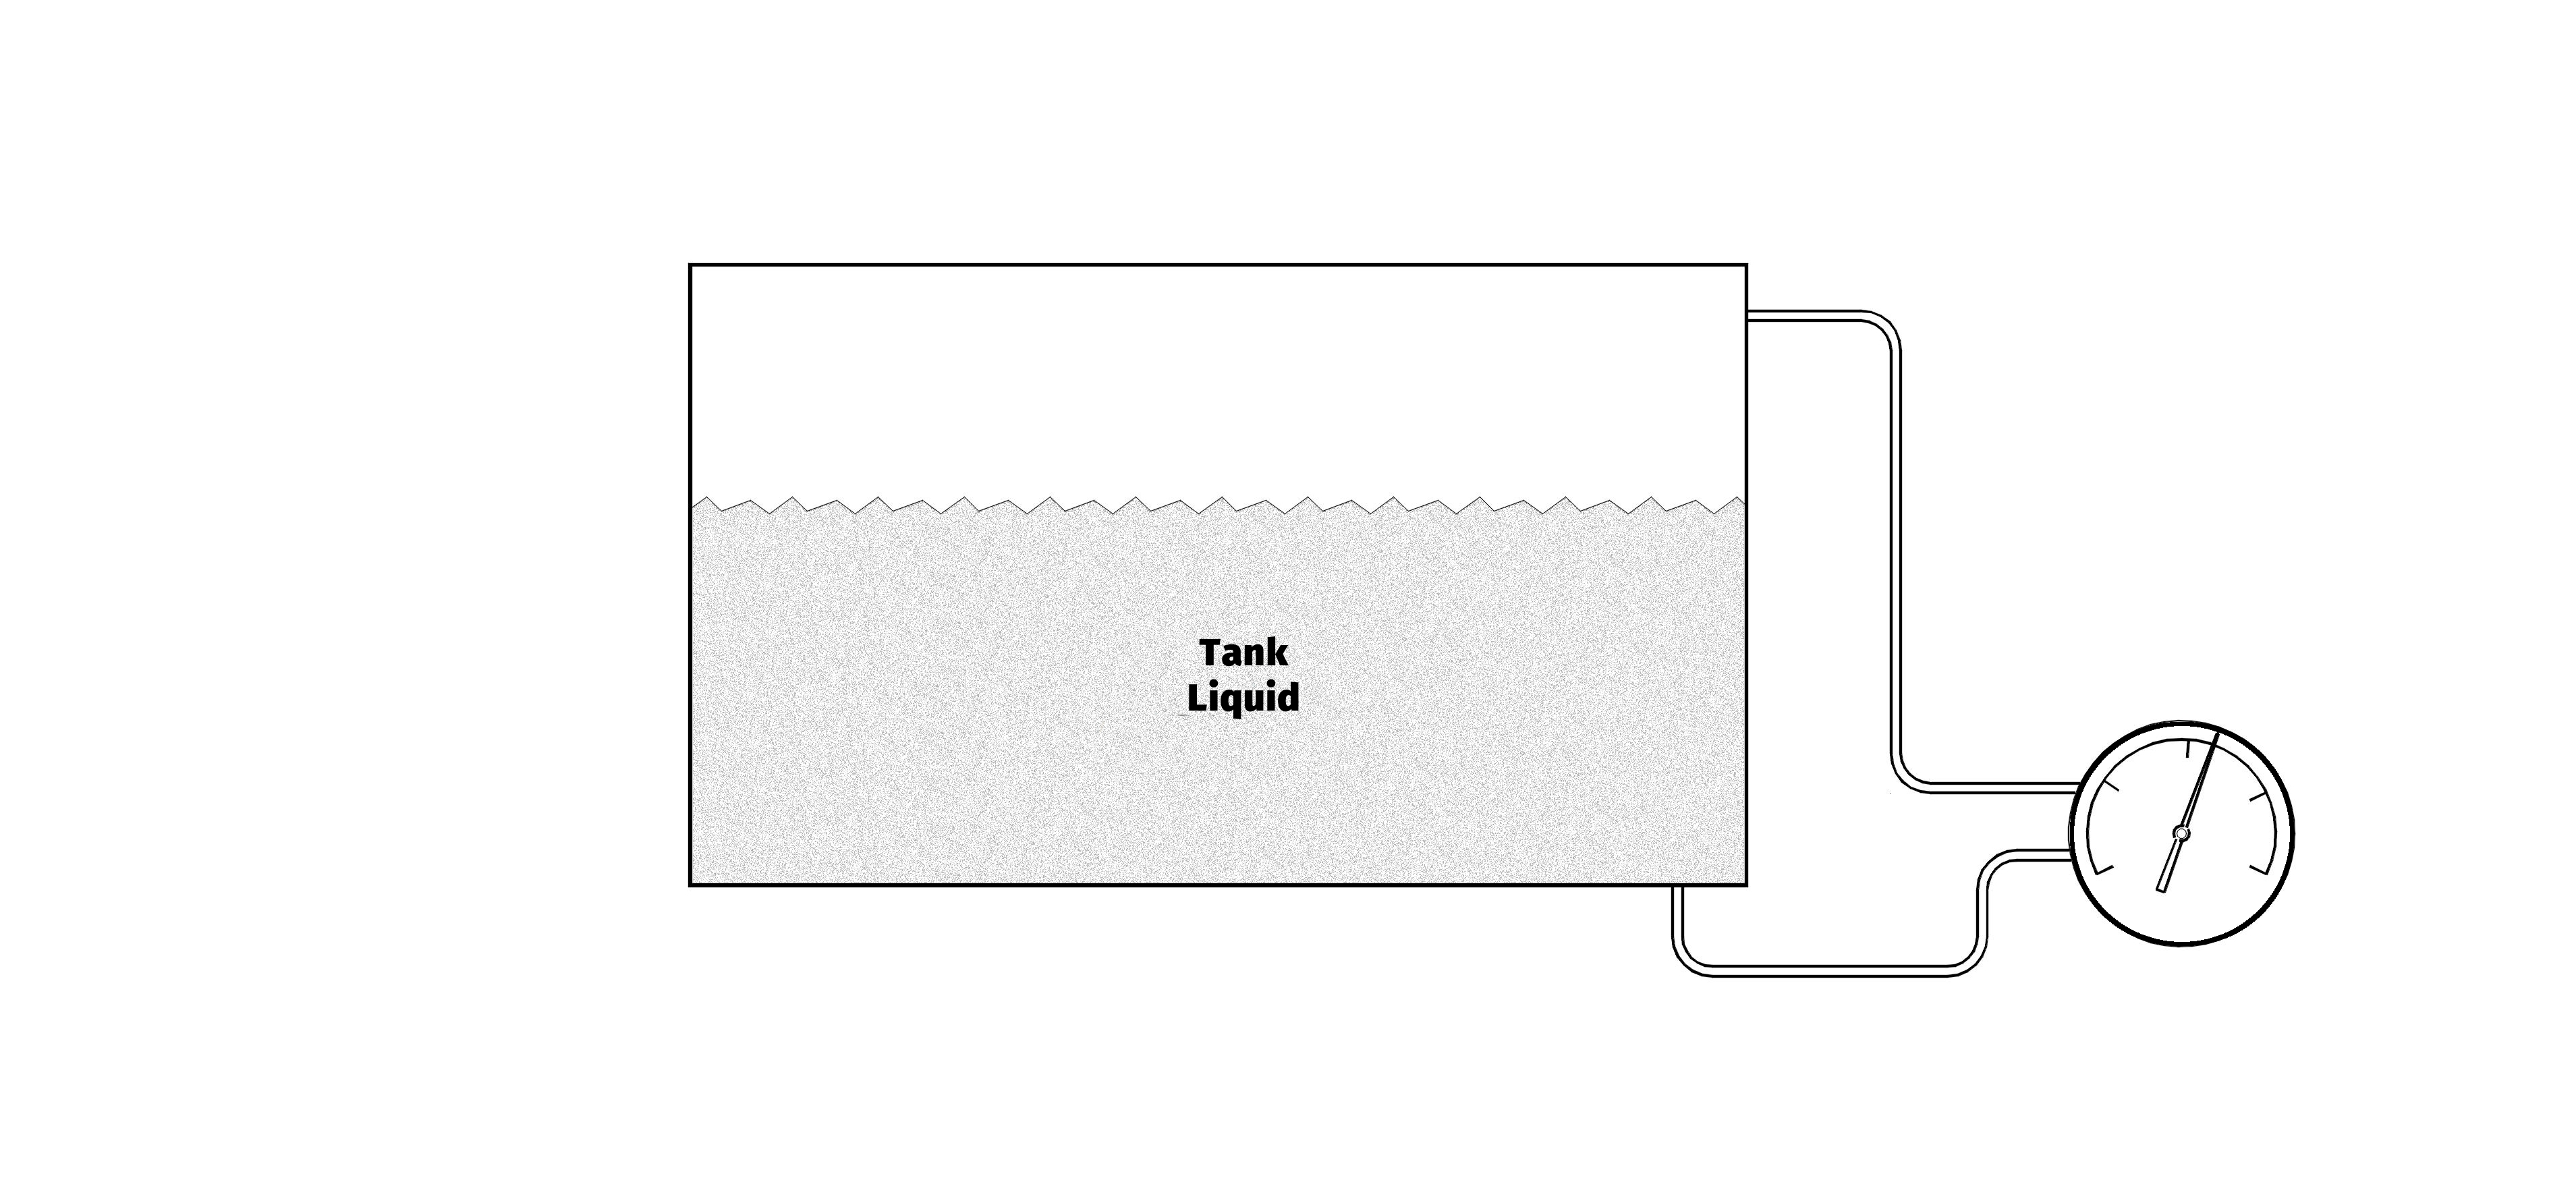 Liquid storage tank